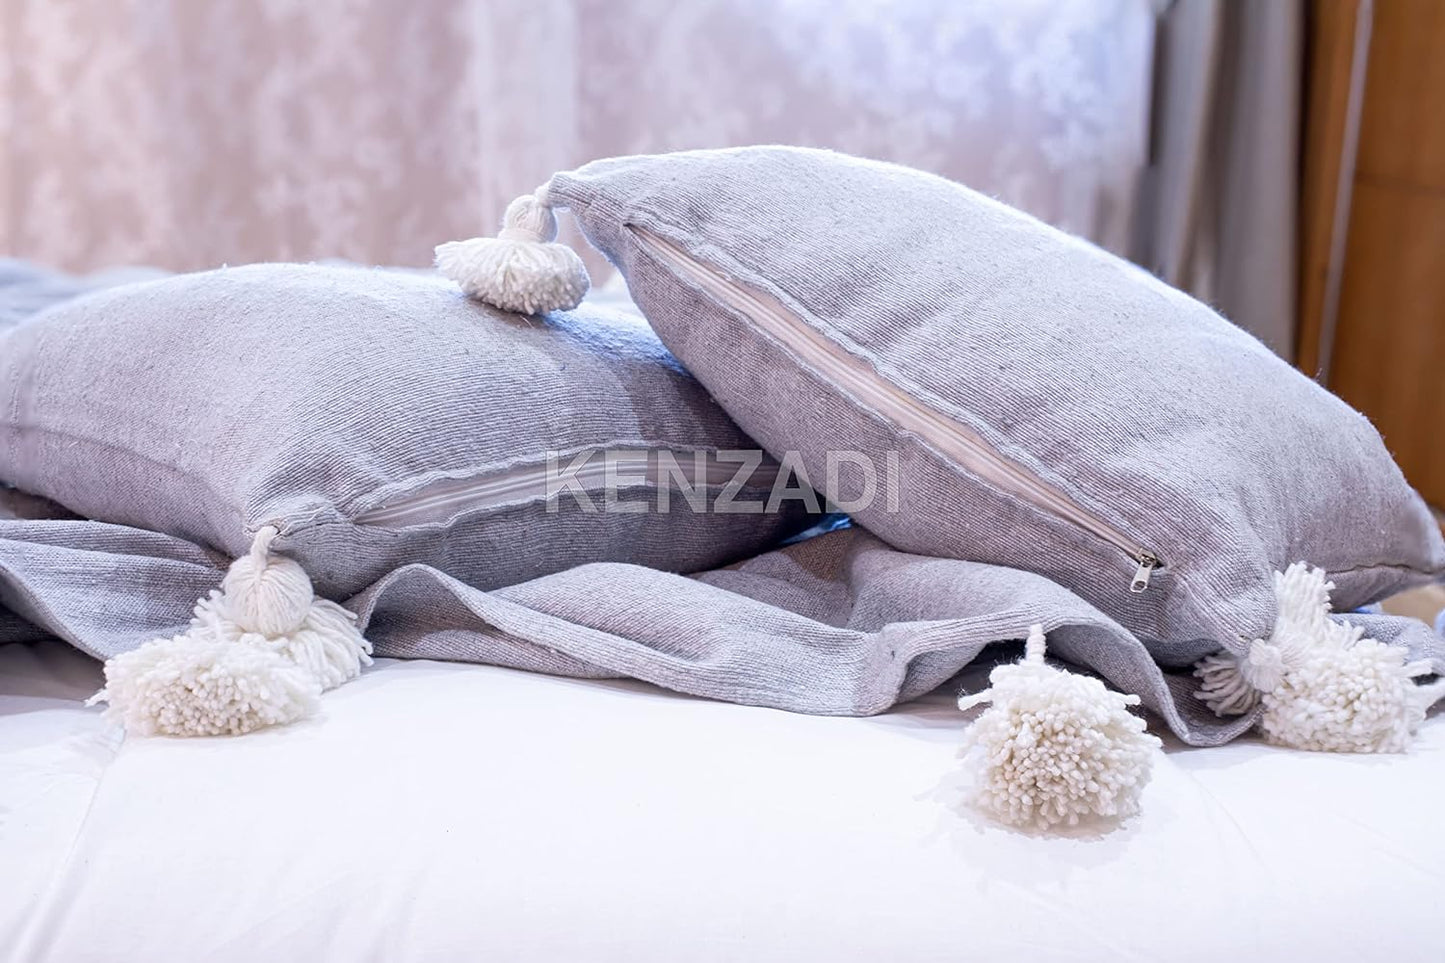 KENZADI Moroccan Handmade Pompom Blanket, Throw Blanket, Pom Pom Blanket, Boho Blanket, Bed Cover, Warm Blanket, Cozy Blanket (Grey with pom White, Queen (U.S. Standard)) - Handmade by My Poufs